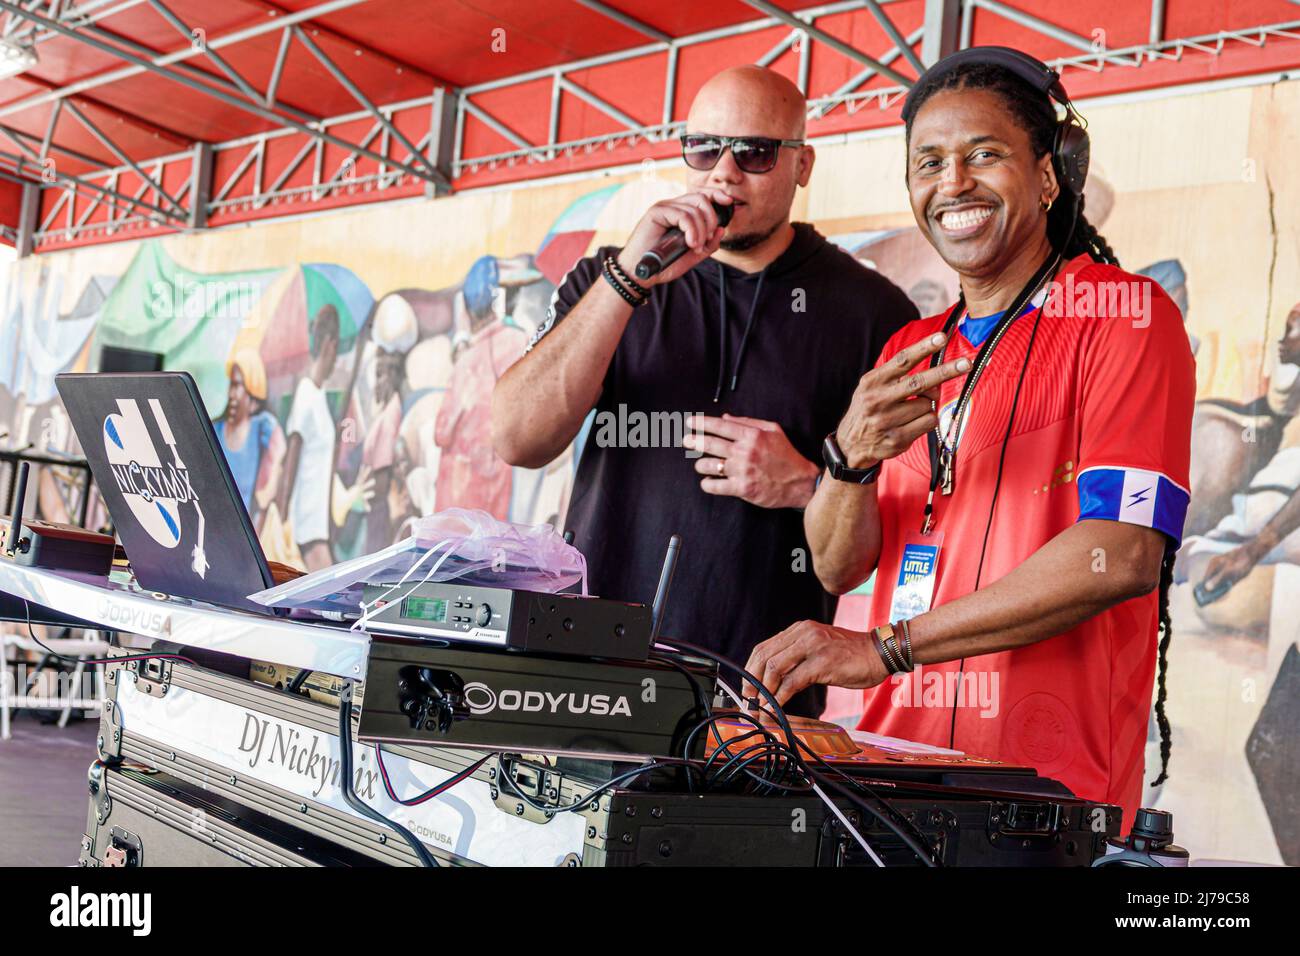 Miami Florida Little Haiti comunidad haitiana evento anual Book Festival Centro Cultural Complejo de cultura criolla Hombres negros DJ mc micrófono emcee Foto de stock